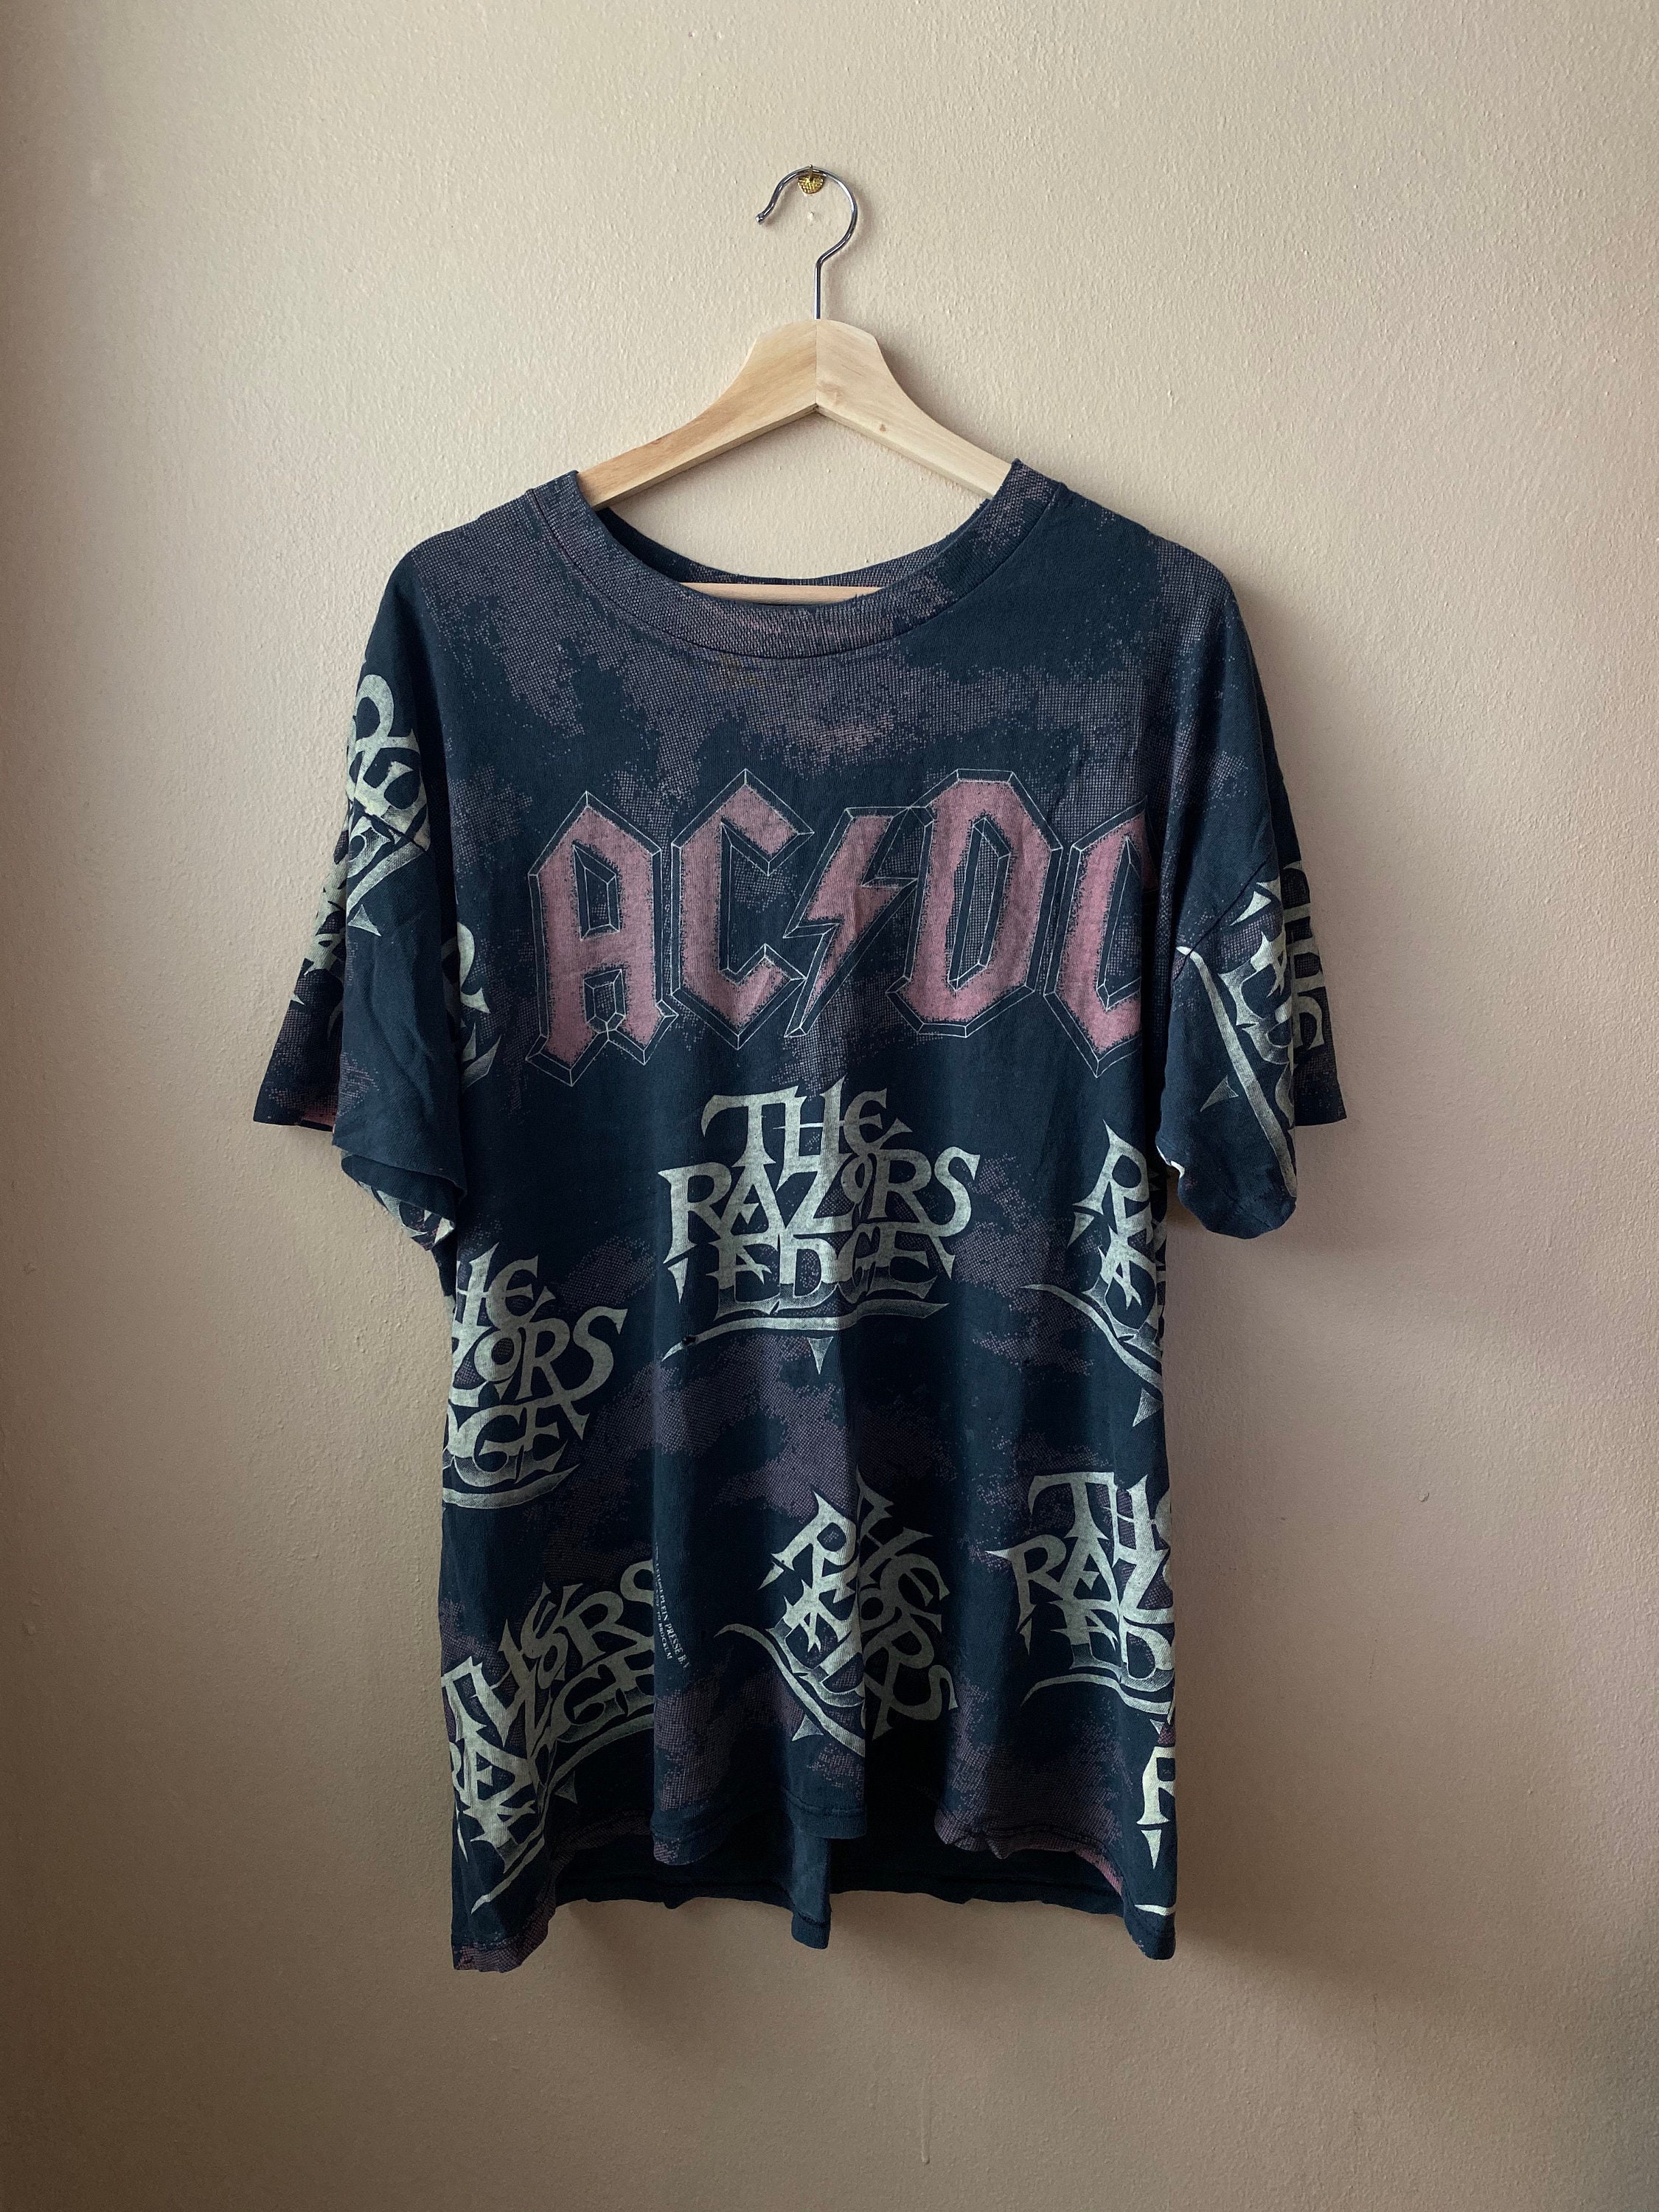 Vintage 1990 AC/DC Razors Edge Album Tour Distressed T-Shirt | Etsy